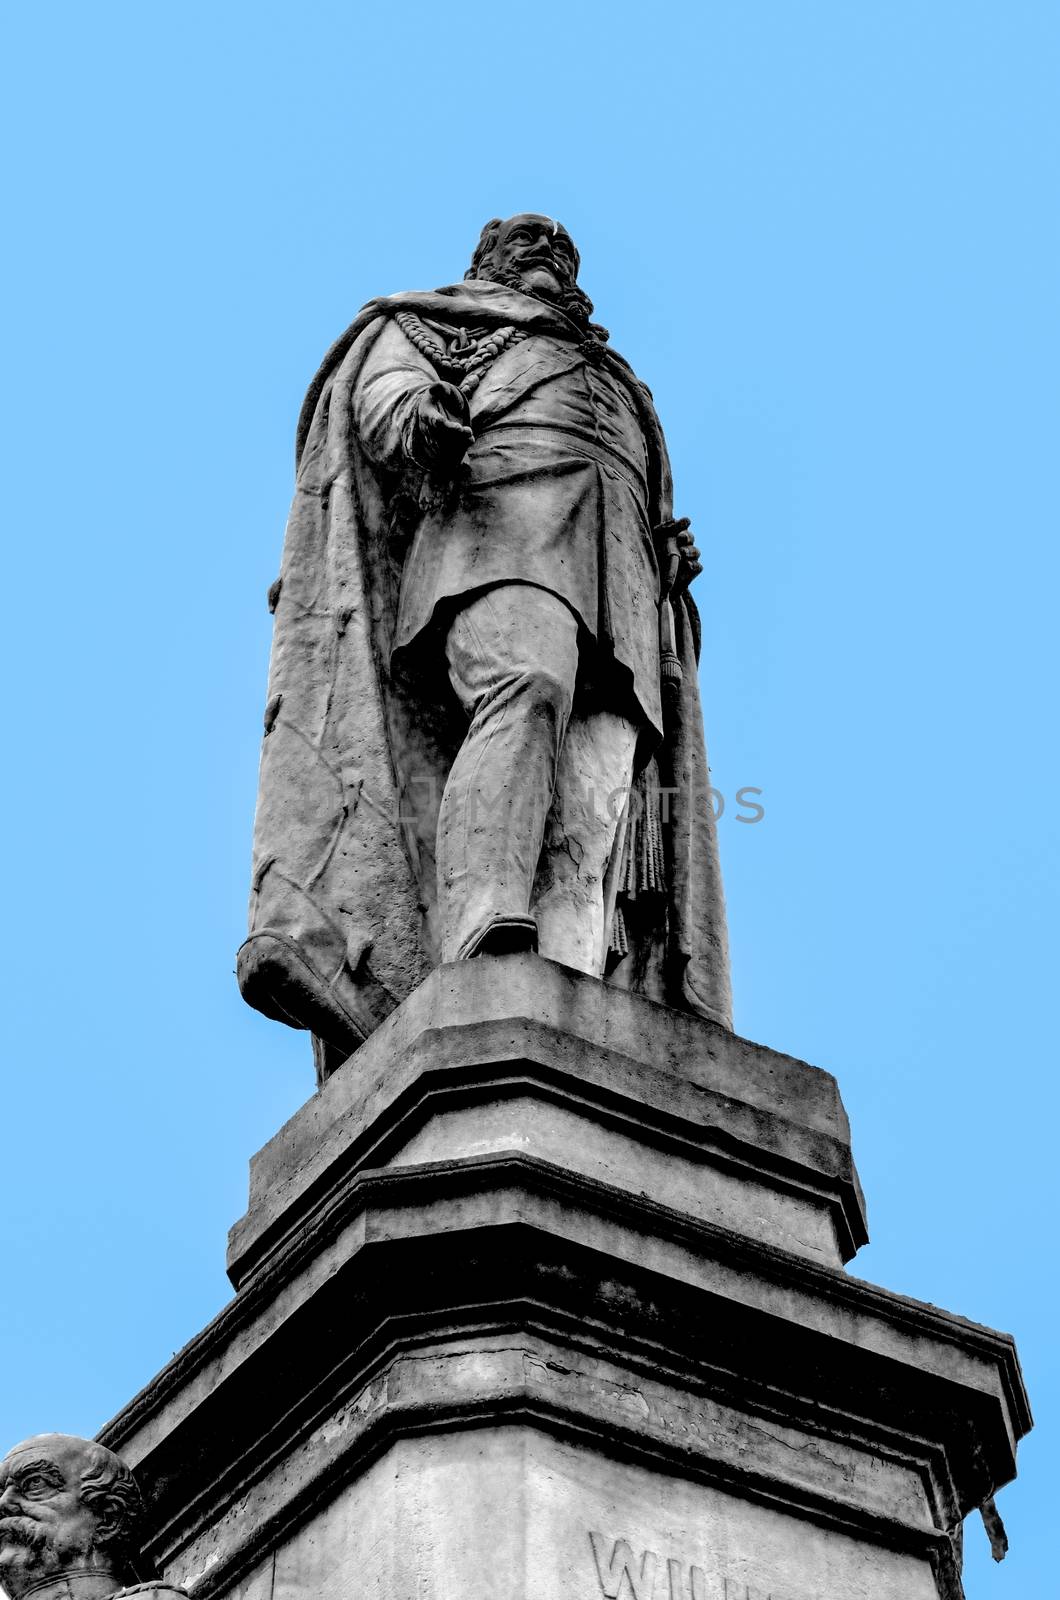 Kaiser wilhelm Memorials on a pedestal in front of a blue sky
